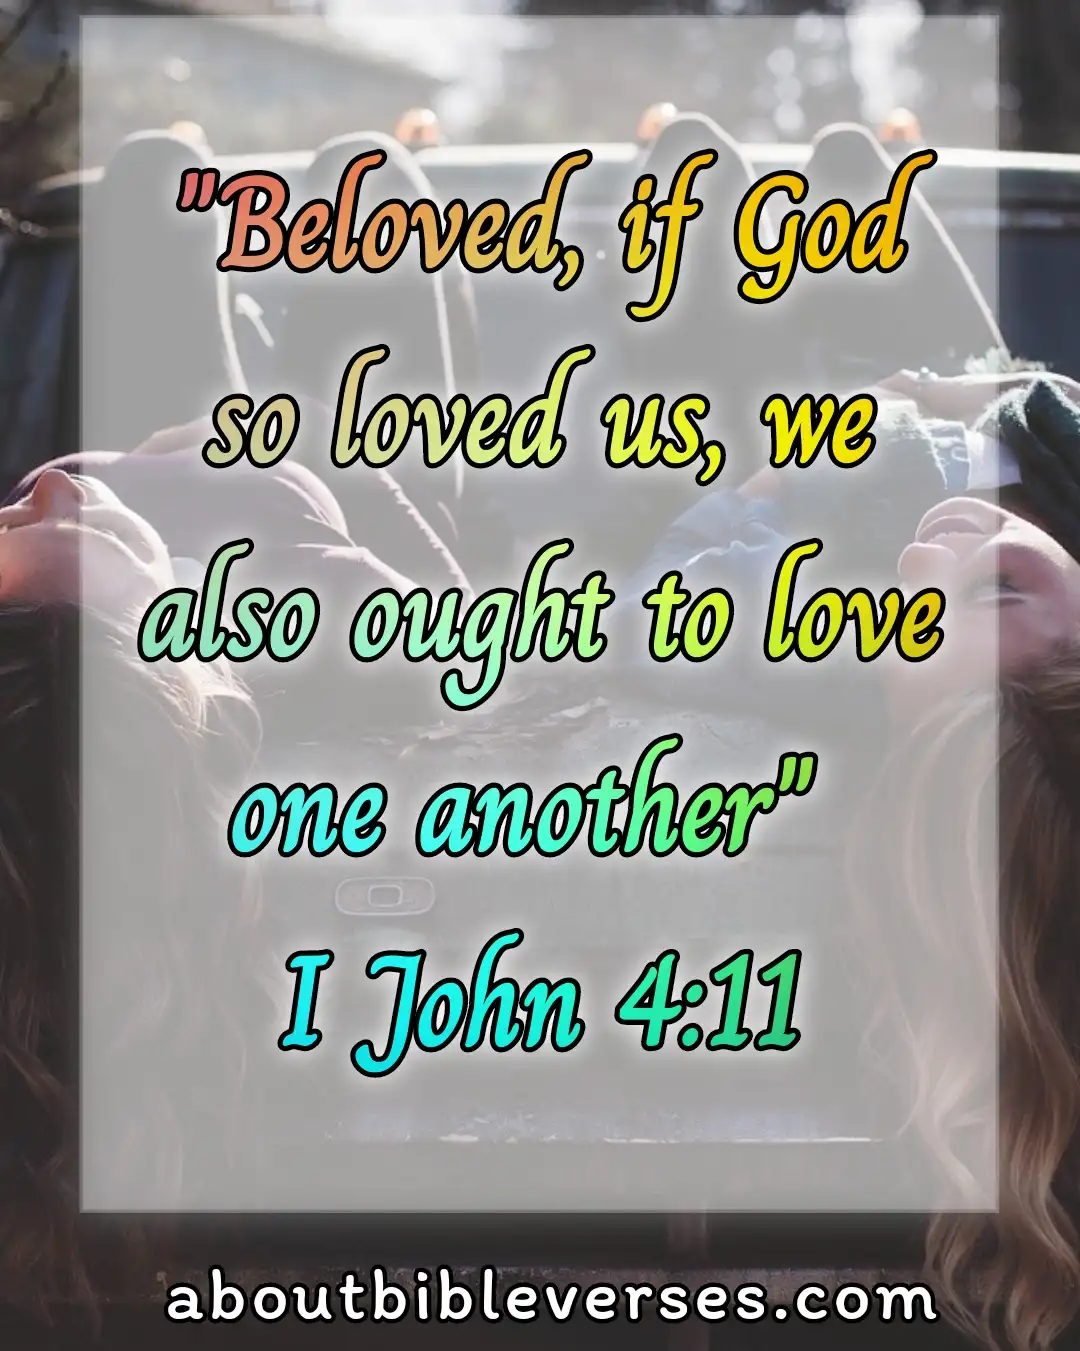 Bible Verses About friendship (1 John 4:11)